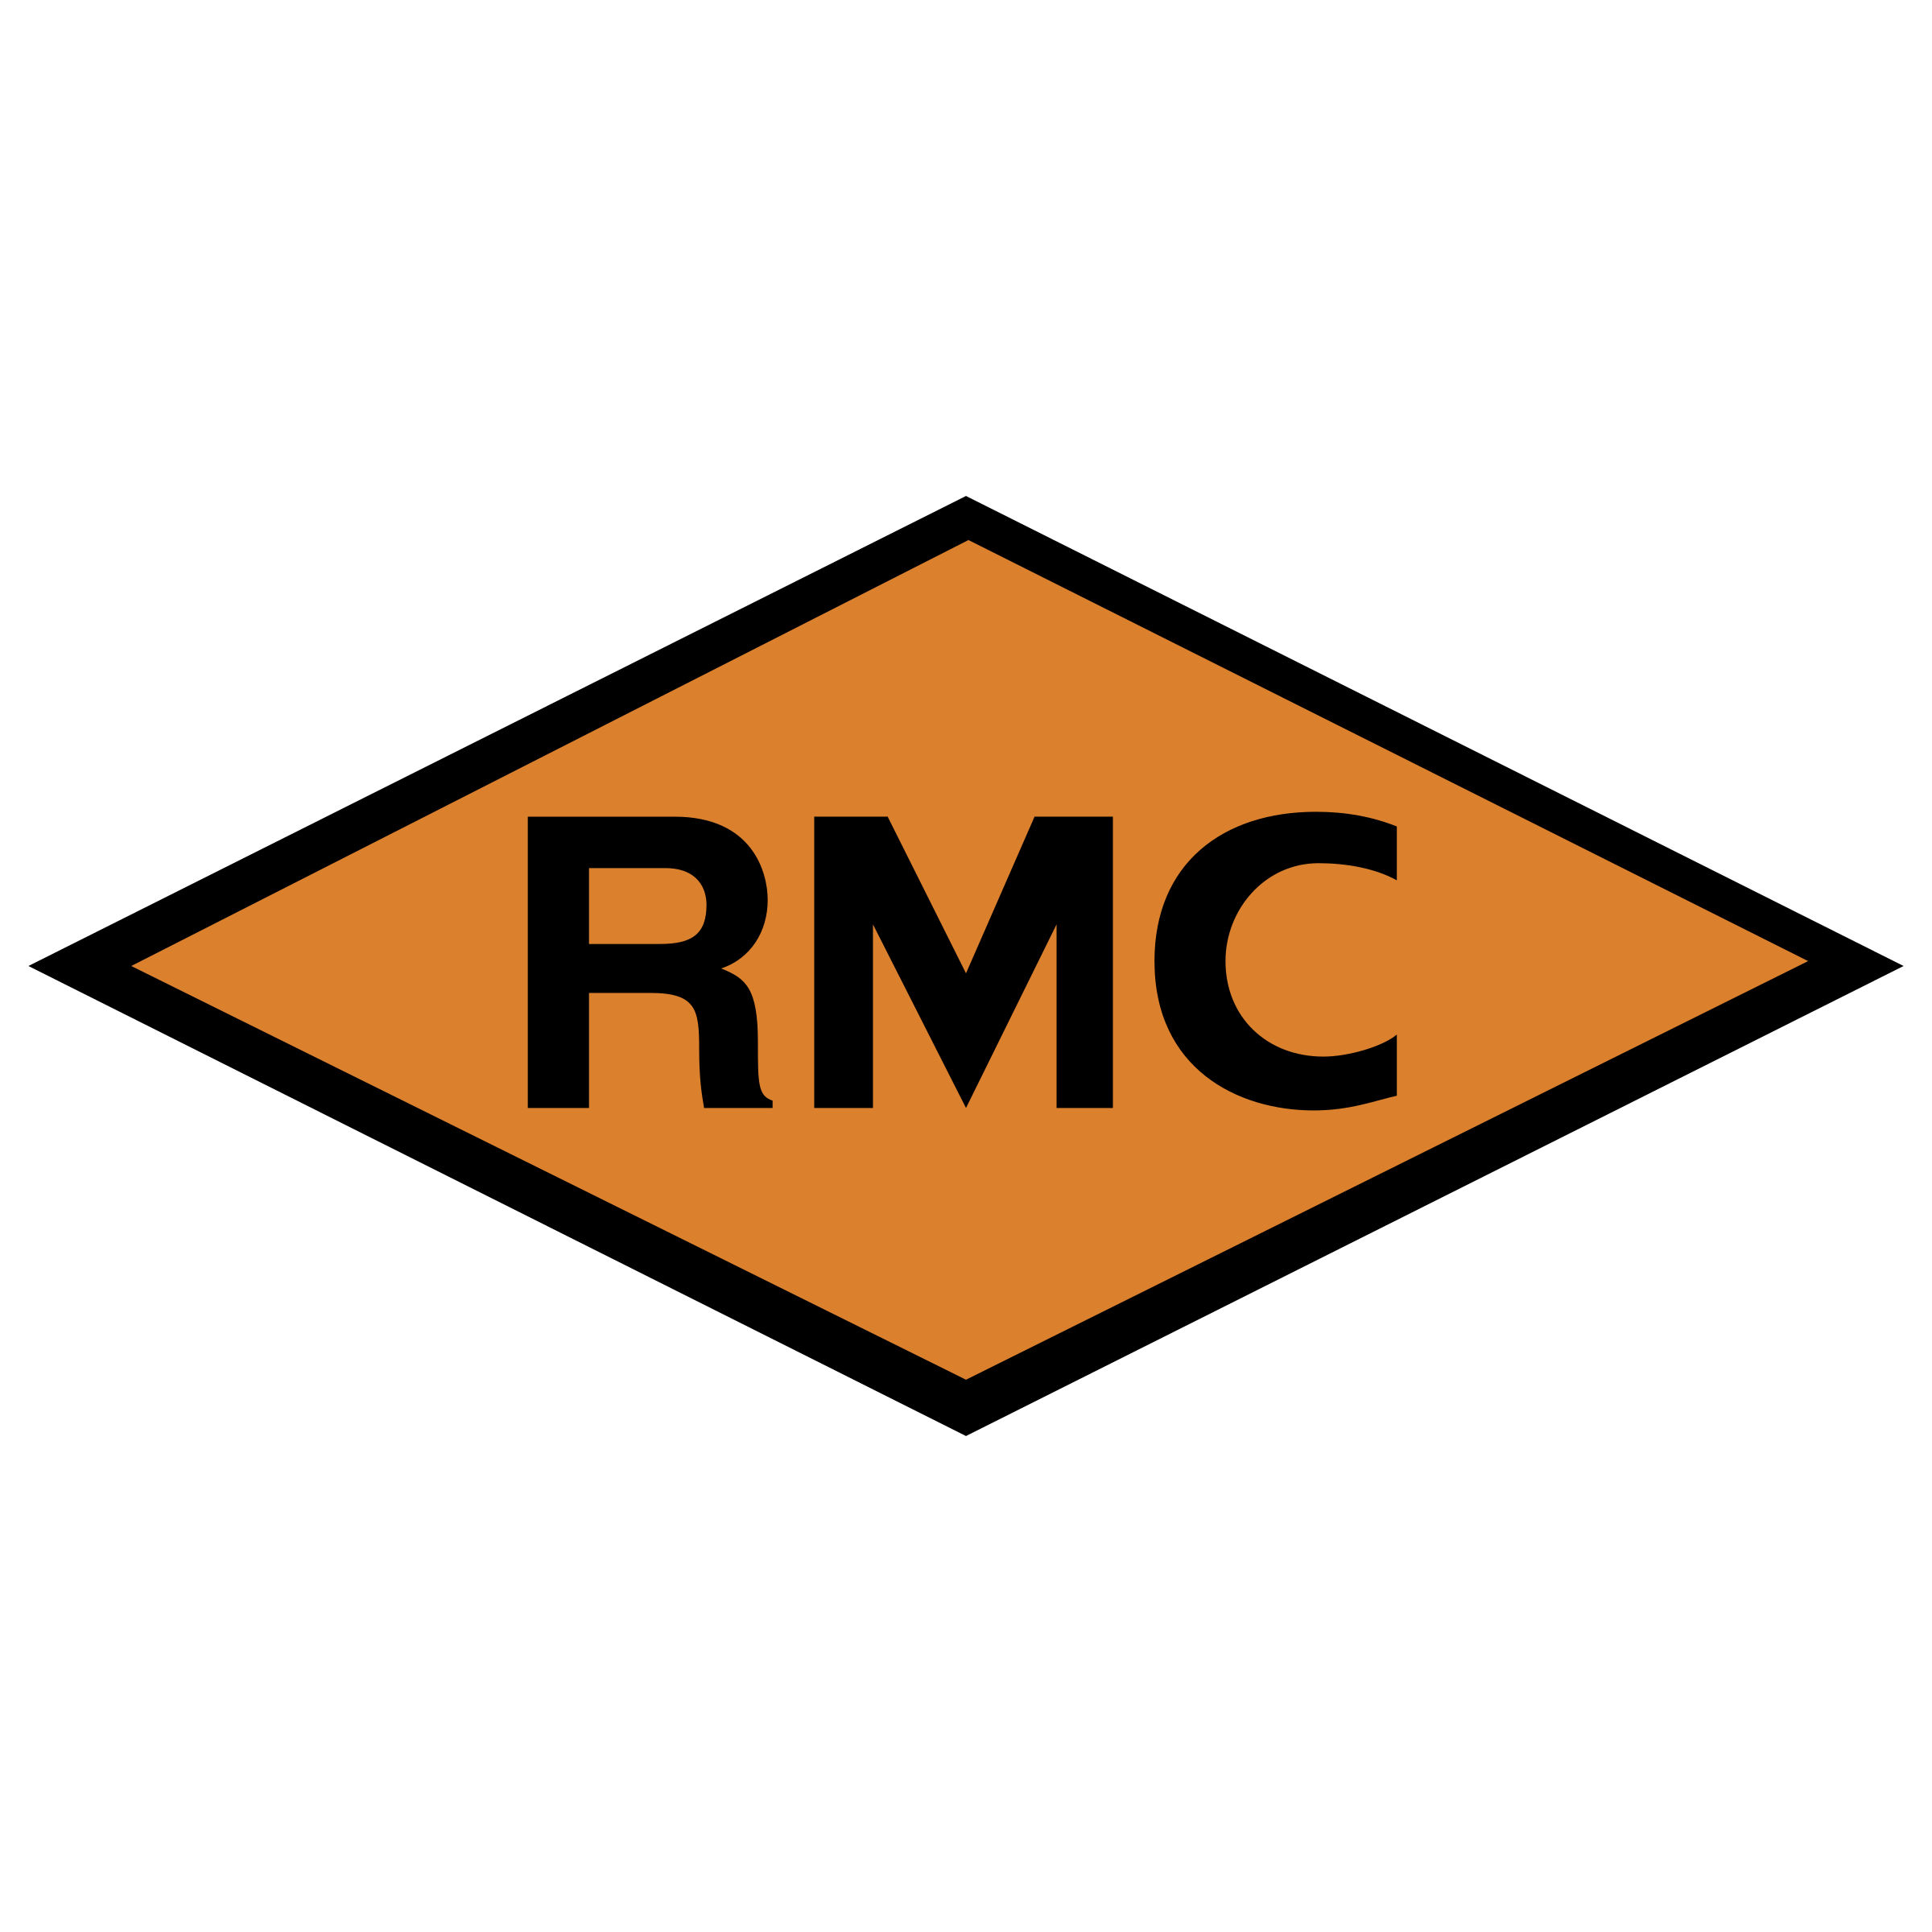 RMC Logo - RMC Logo PNG Transparent & SVG Vector